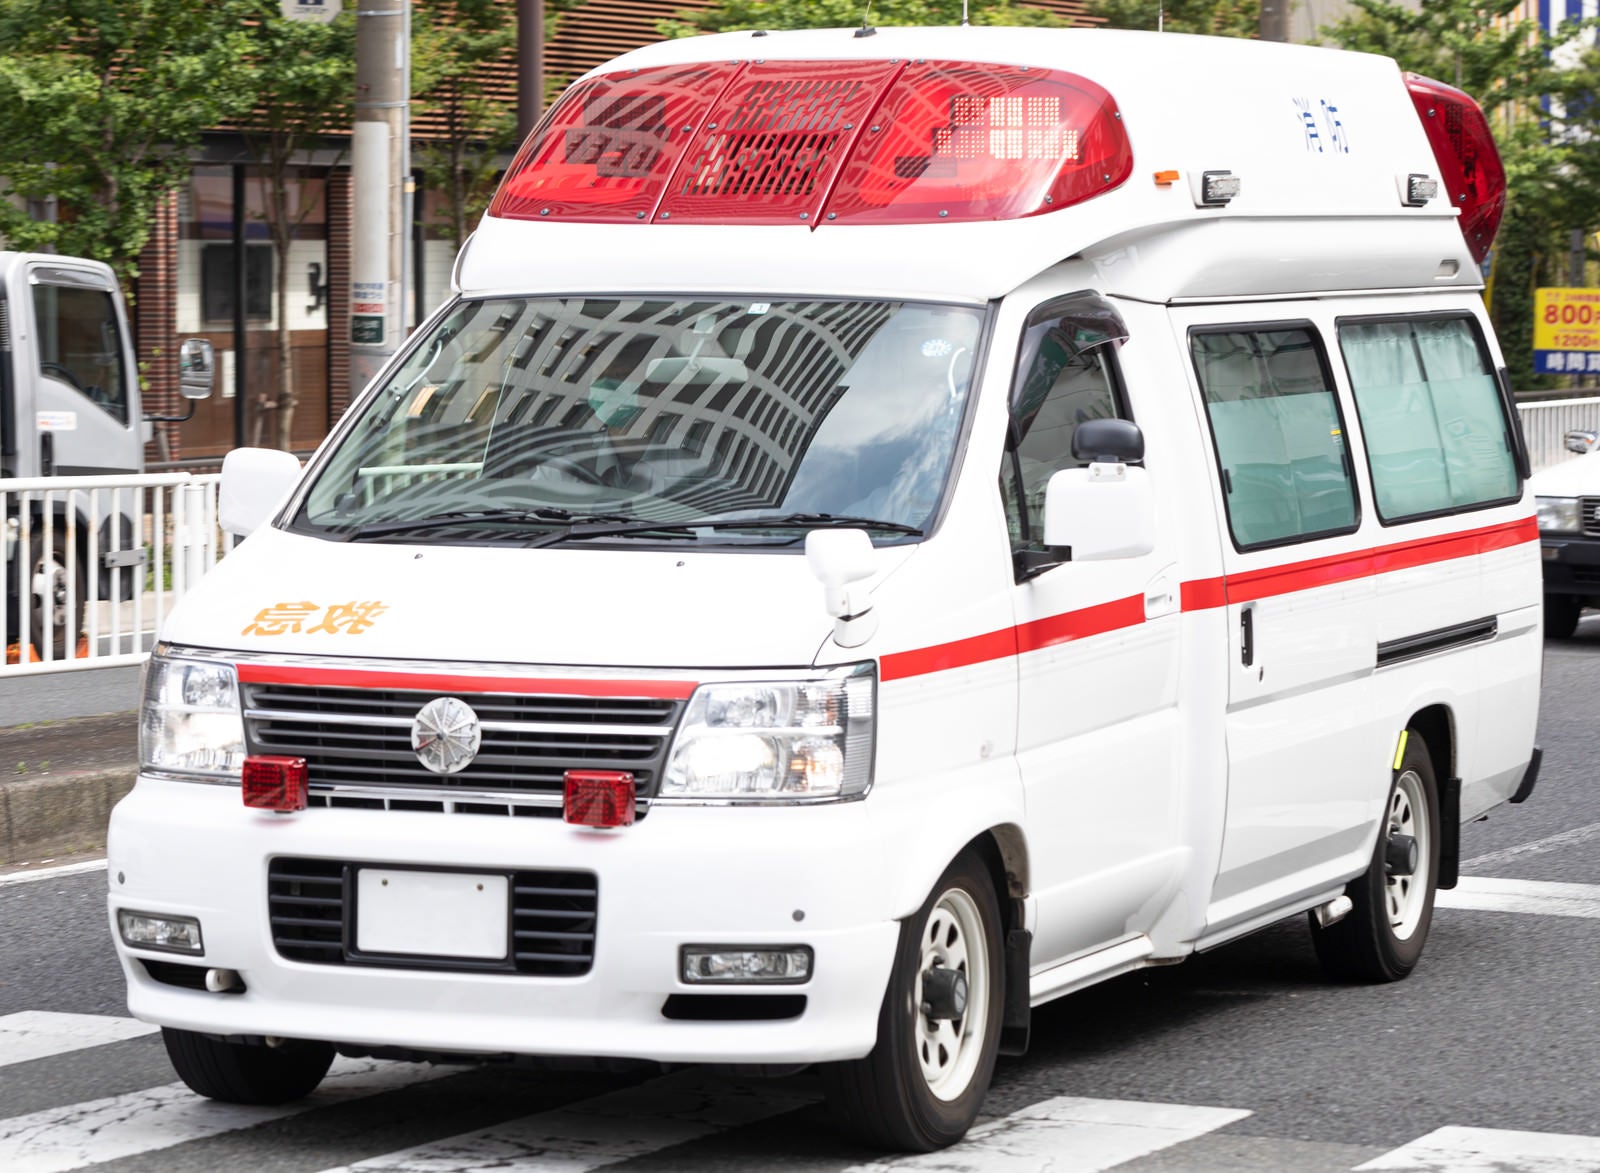 「救急車」の写真